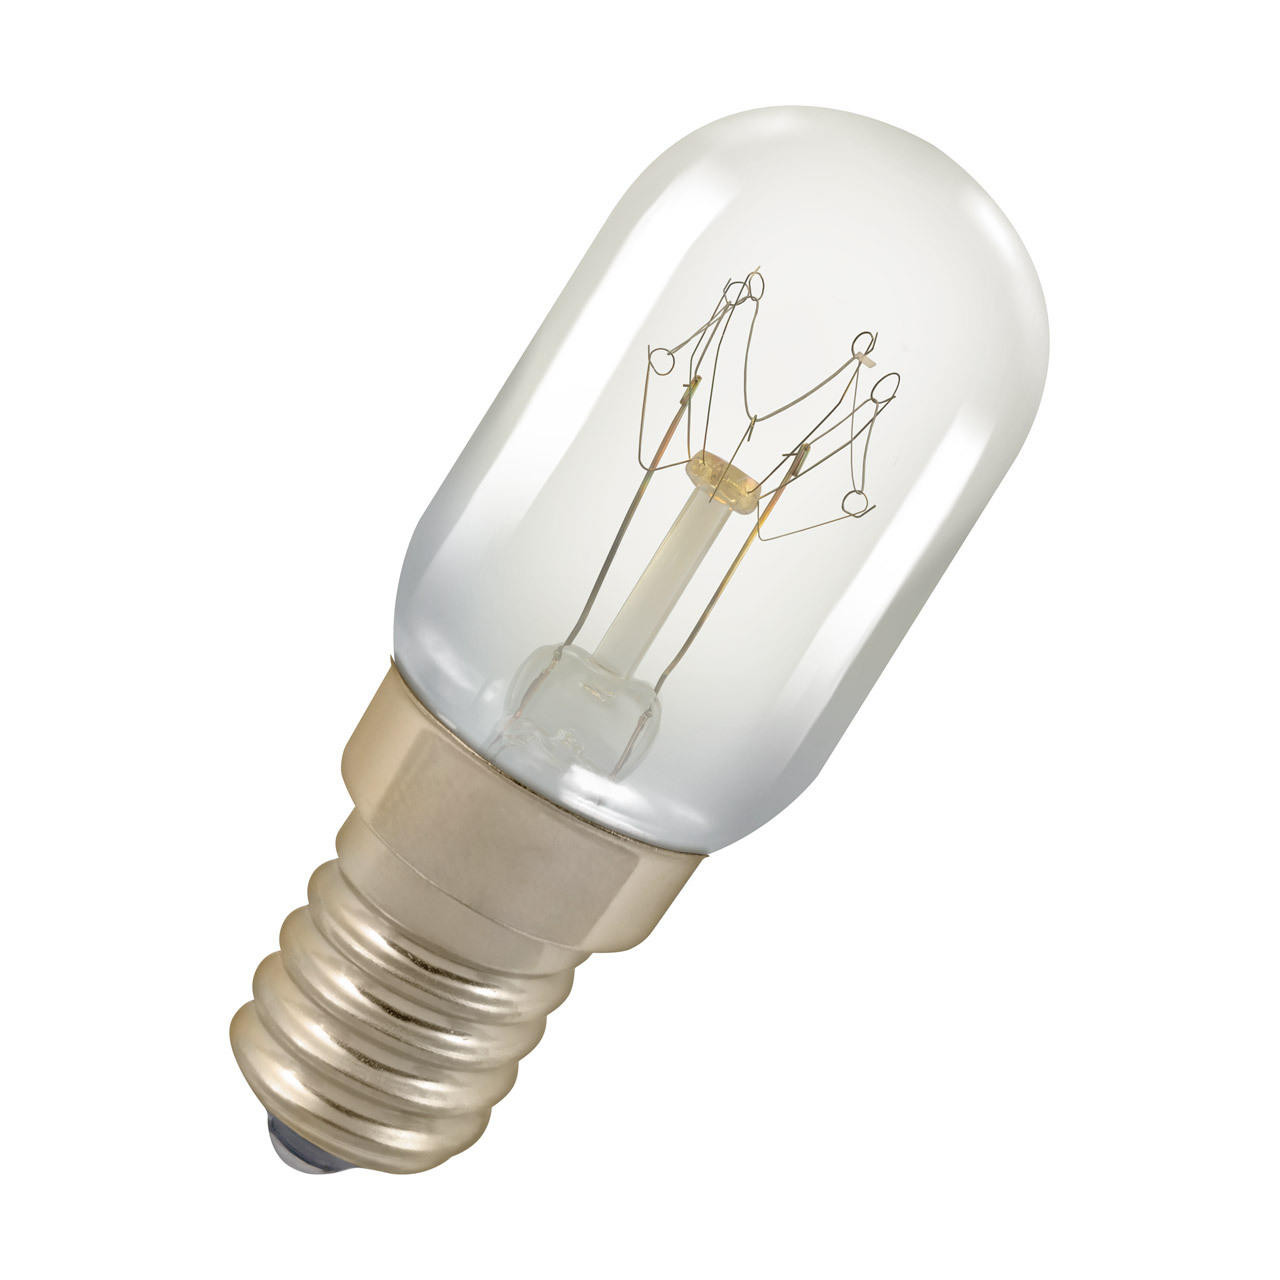 Mini Refrigerator LED Light Bulb Freezer Fridge Lamp Glass Lamp E14 White  Warm White 220V From Yinke_led, $1.98